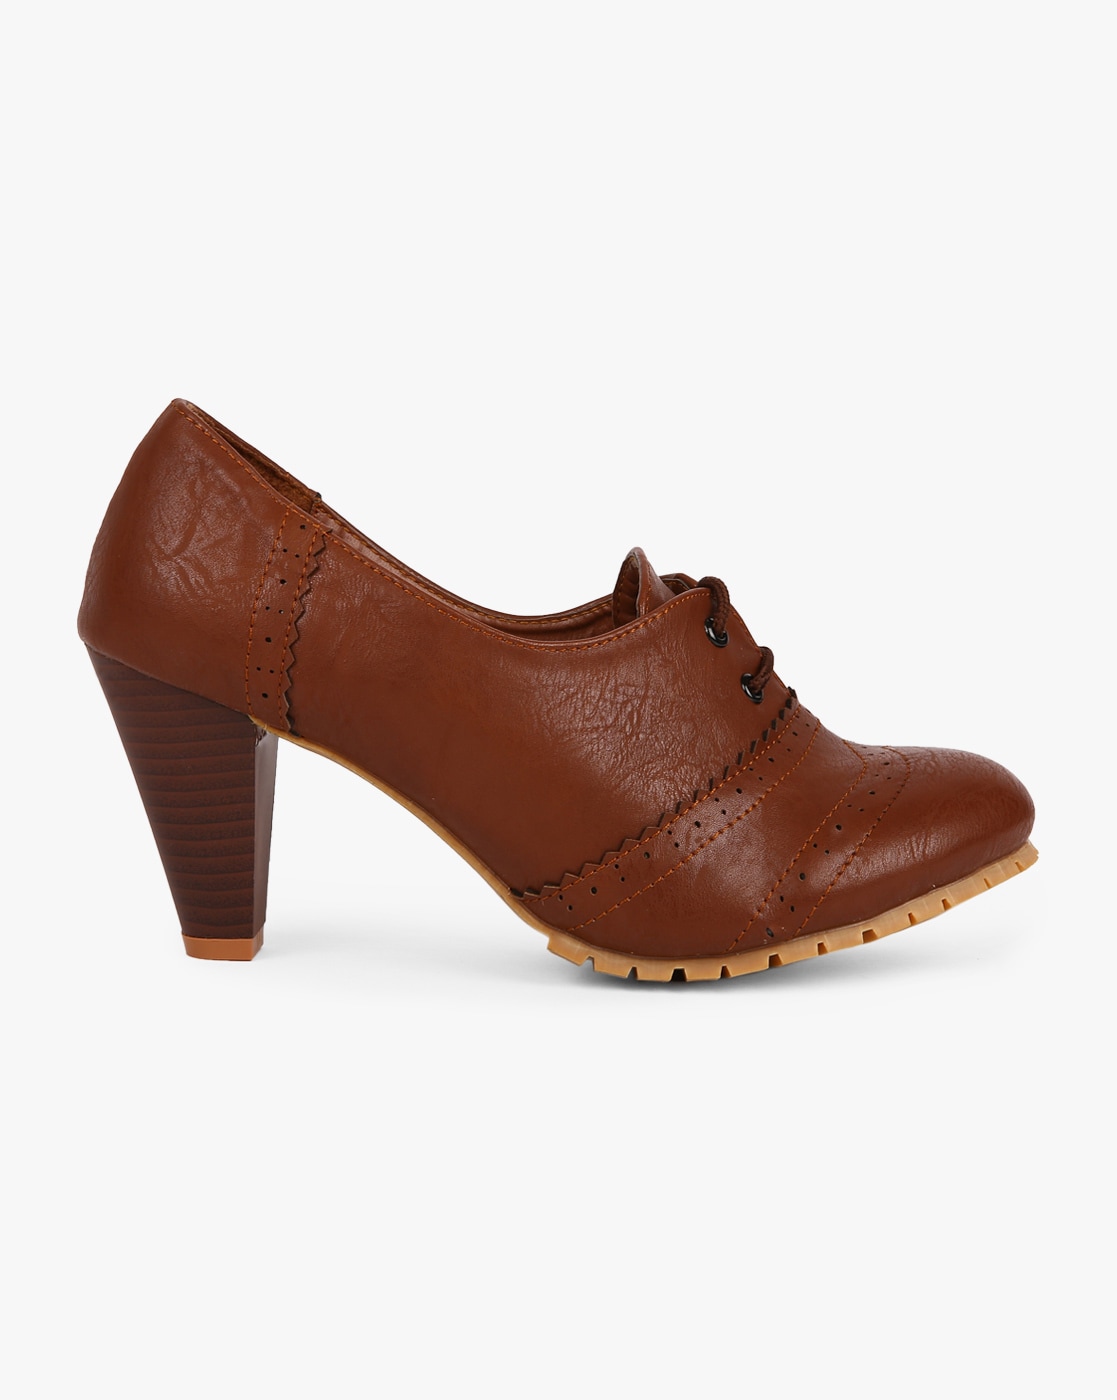 Black Vintage Oxford Heels Lace Up Women's Wingtip Shoes | FSJshoes